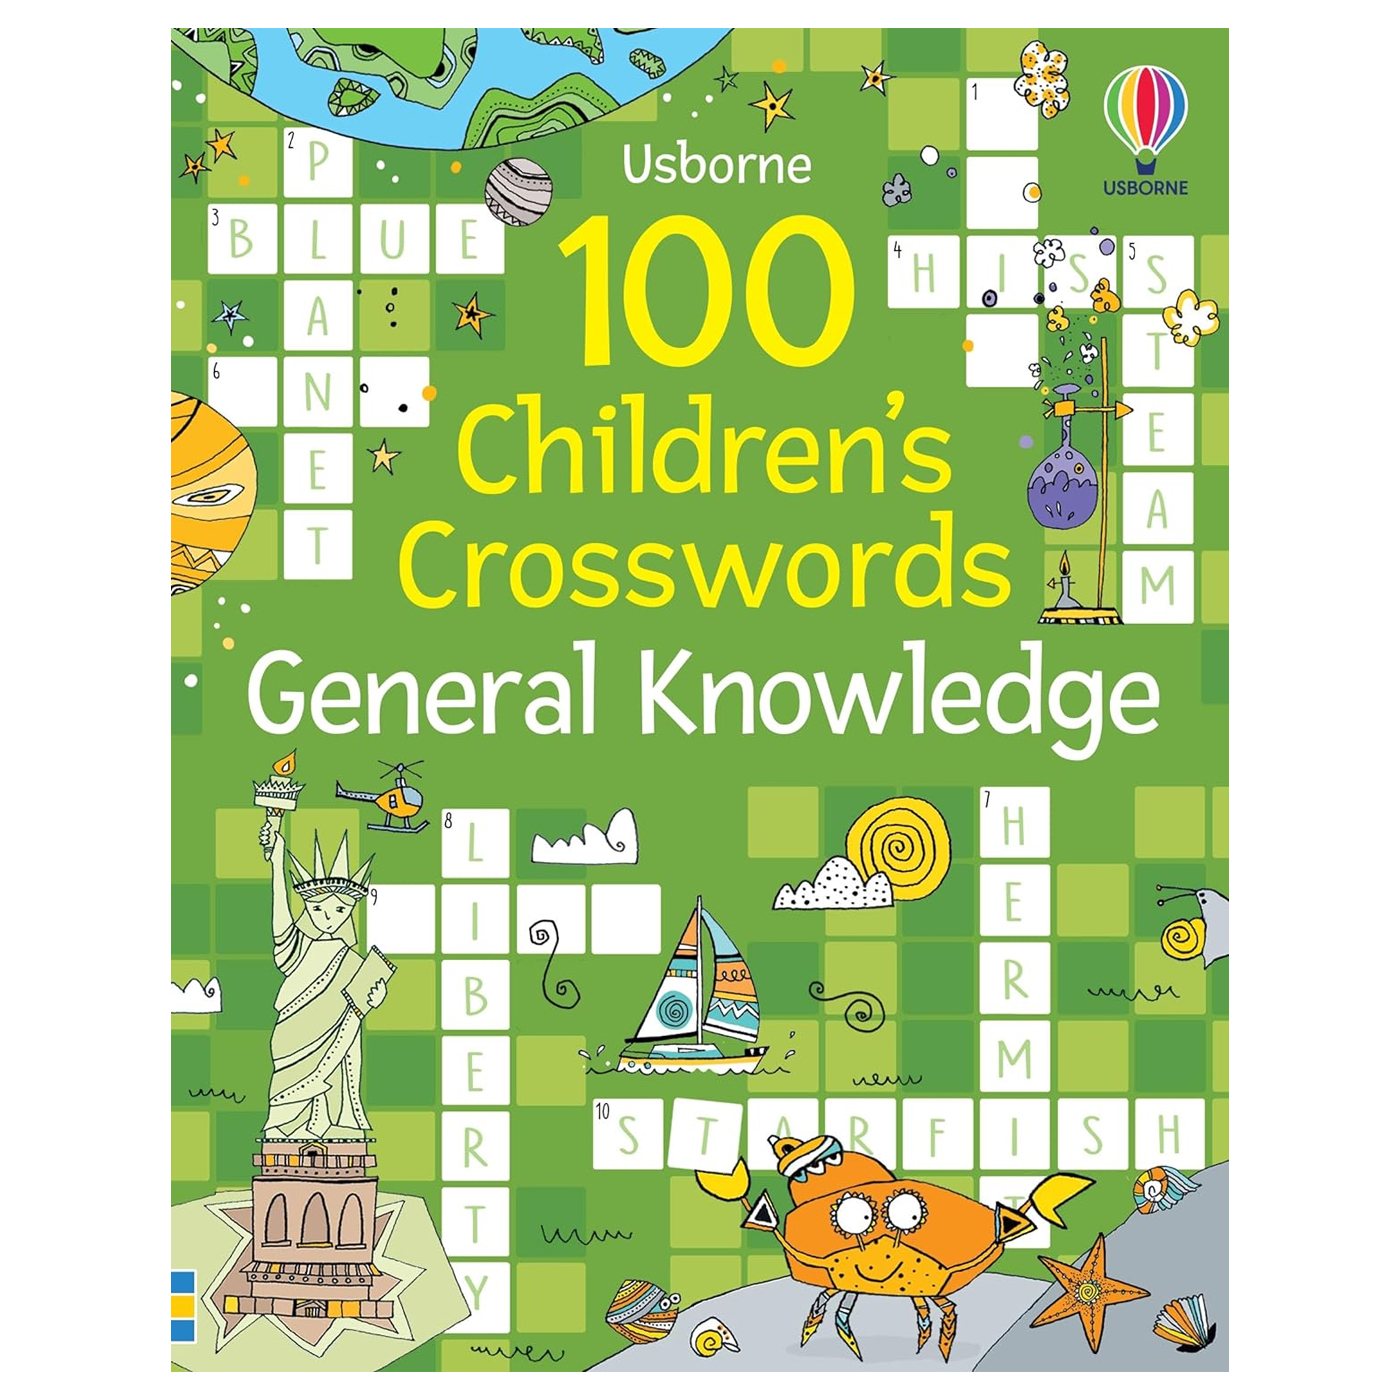 USBORNE 100 Children's Crosswords: General Knowledge